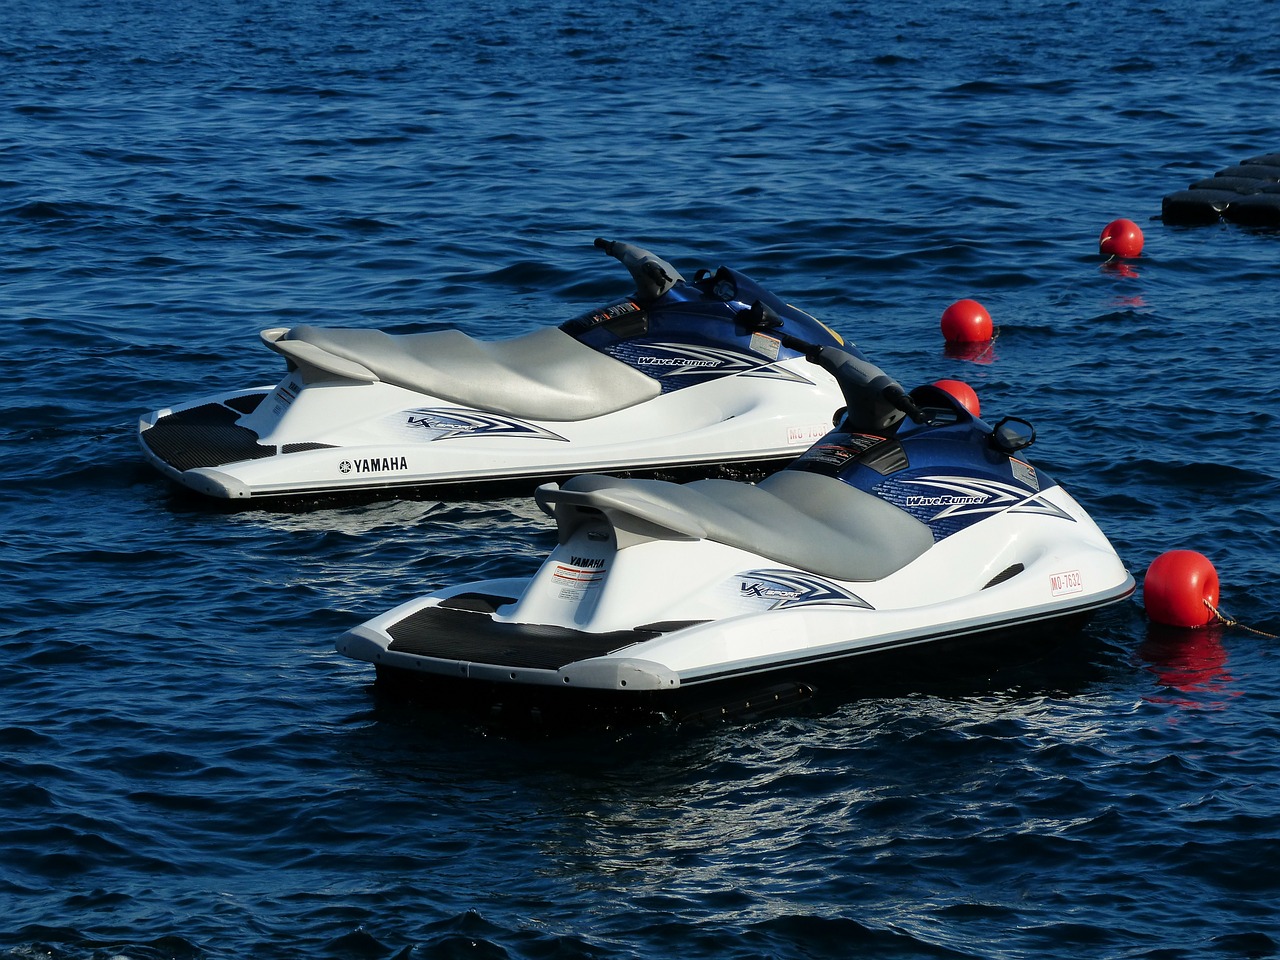 jet ski personal watercraft jet boat free photo